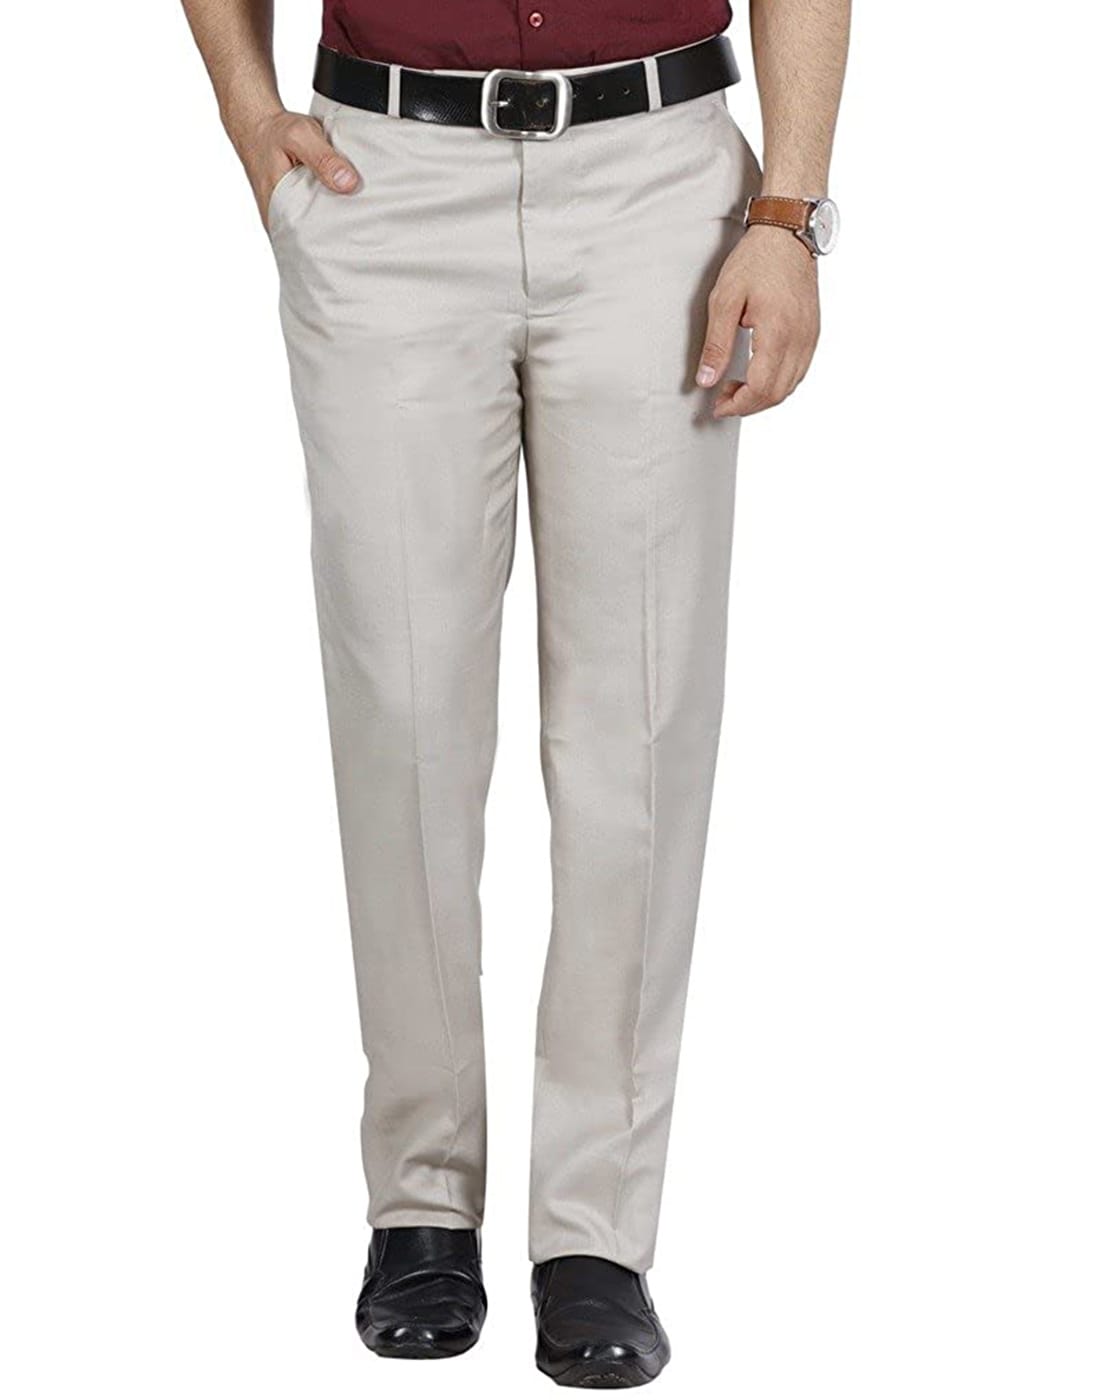 Cream Pant Matching Shirt | Cream Pant Combination - TiptopGents